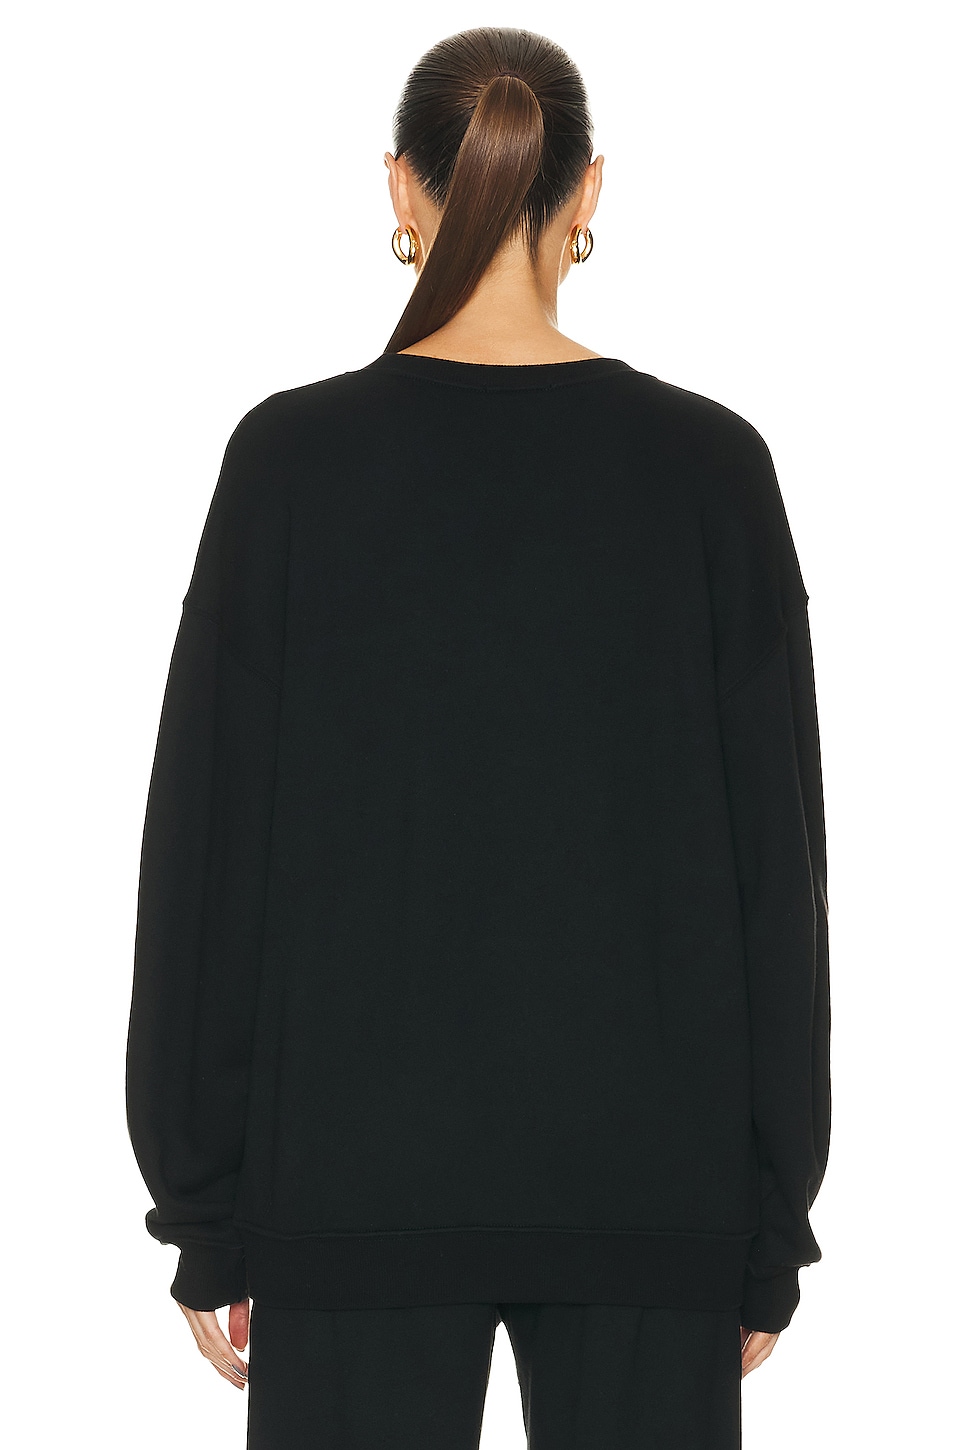 Eterne Oversized Crewneck Sweatshirt in Black | FWRD